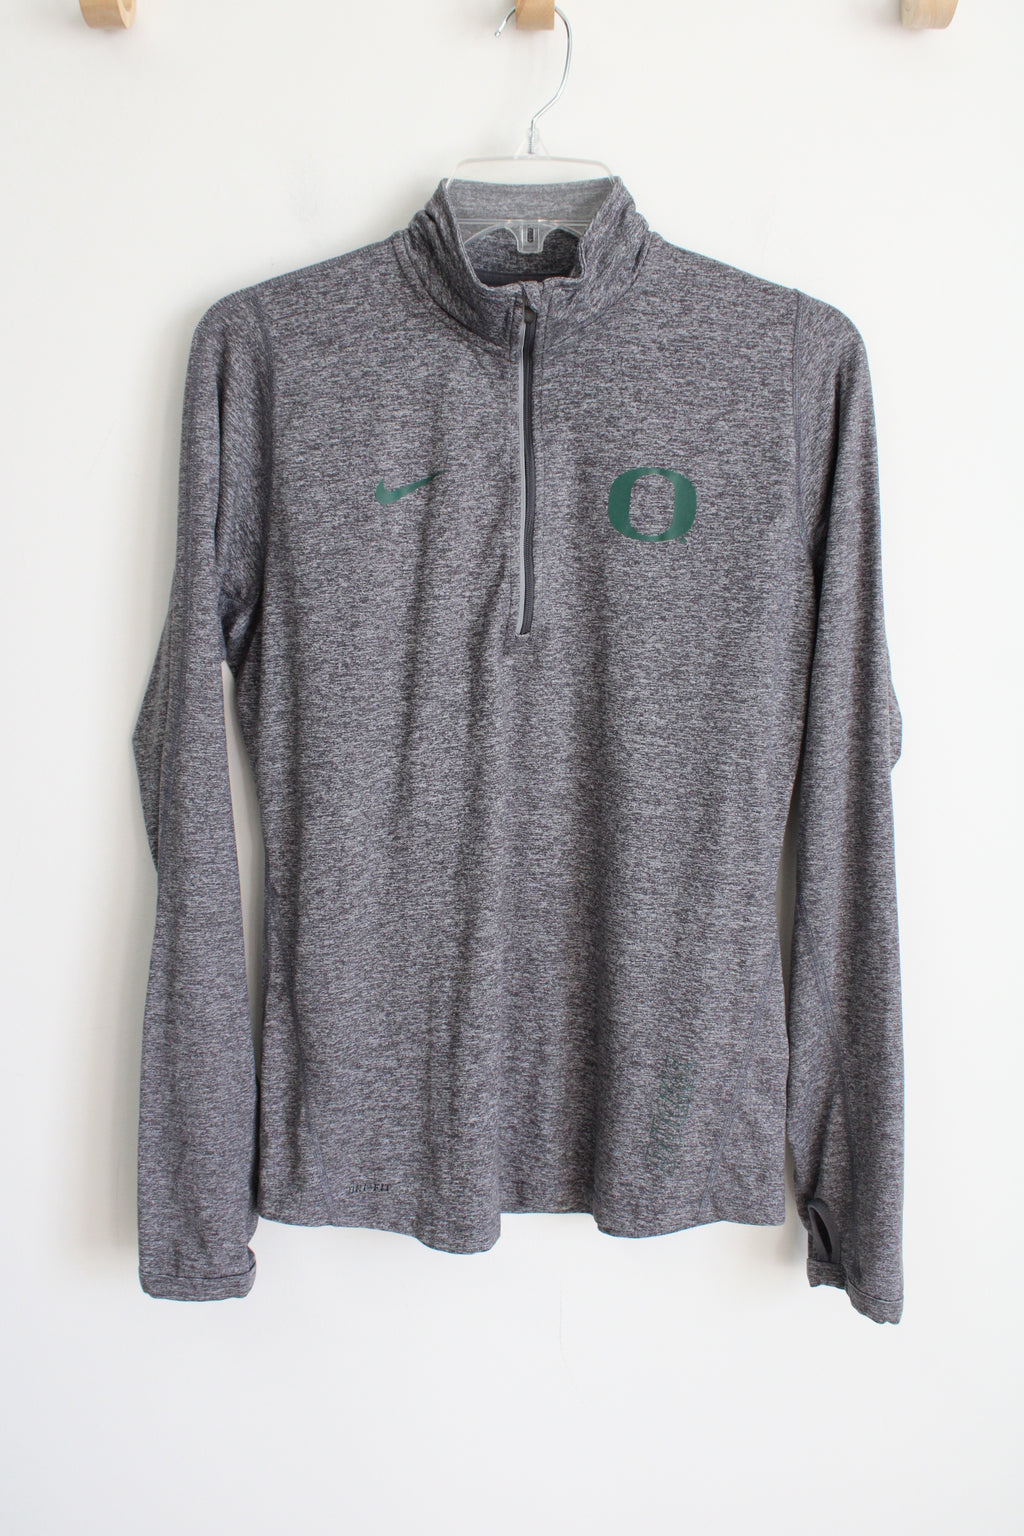 Nike Dri-Fit Gray Pullover 1/4" Zip Oregon Ducks Sweatshirt | M